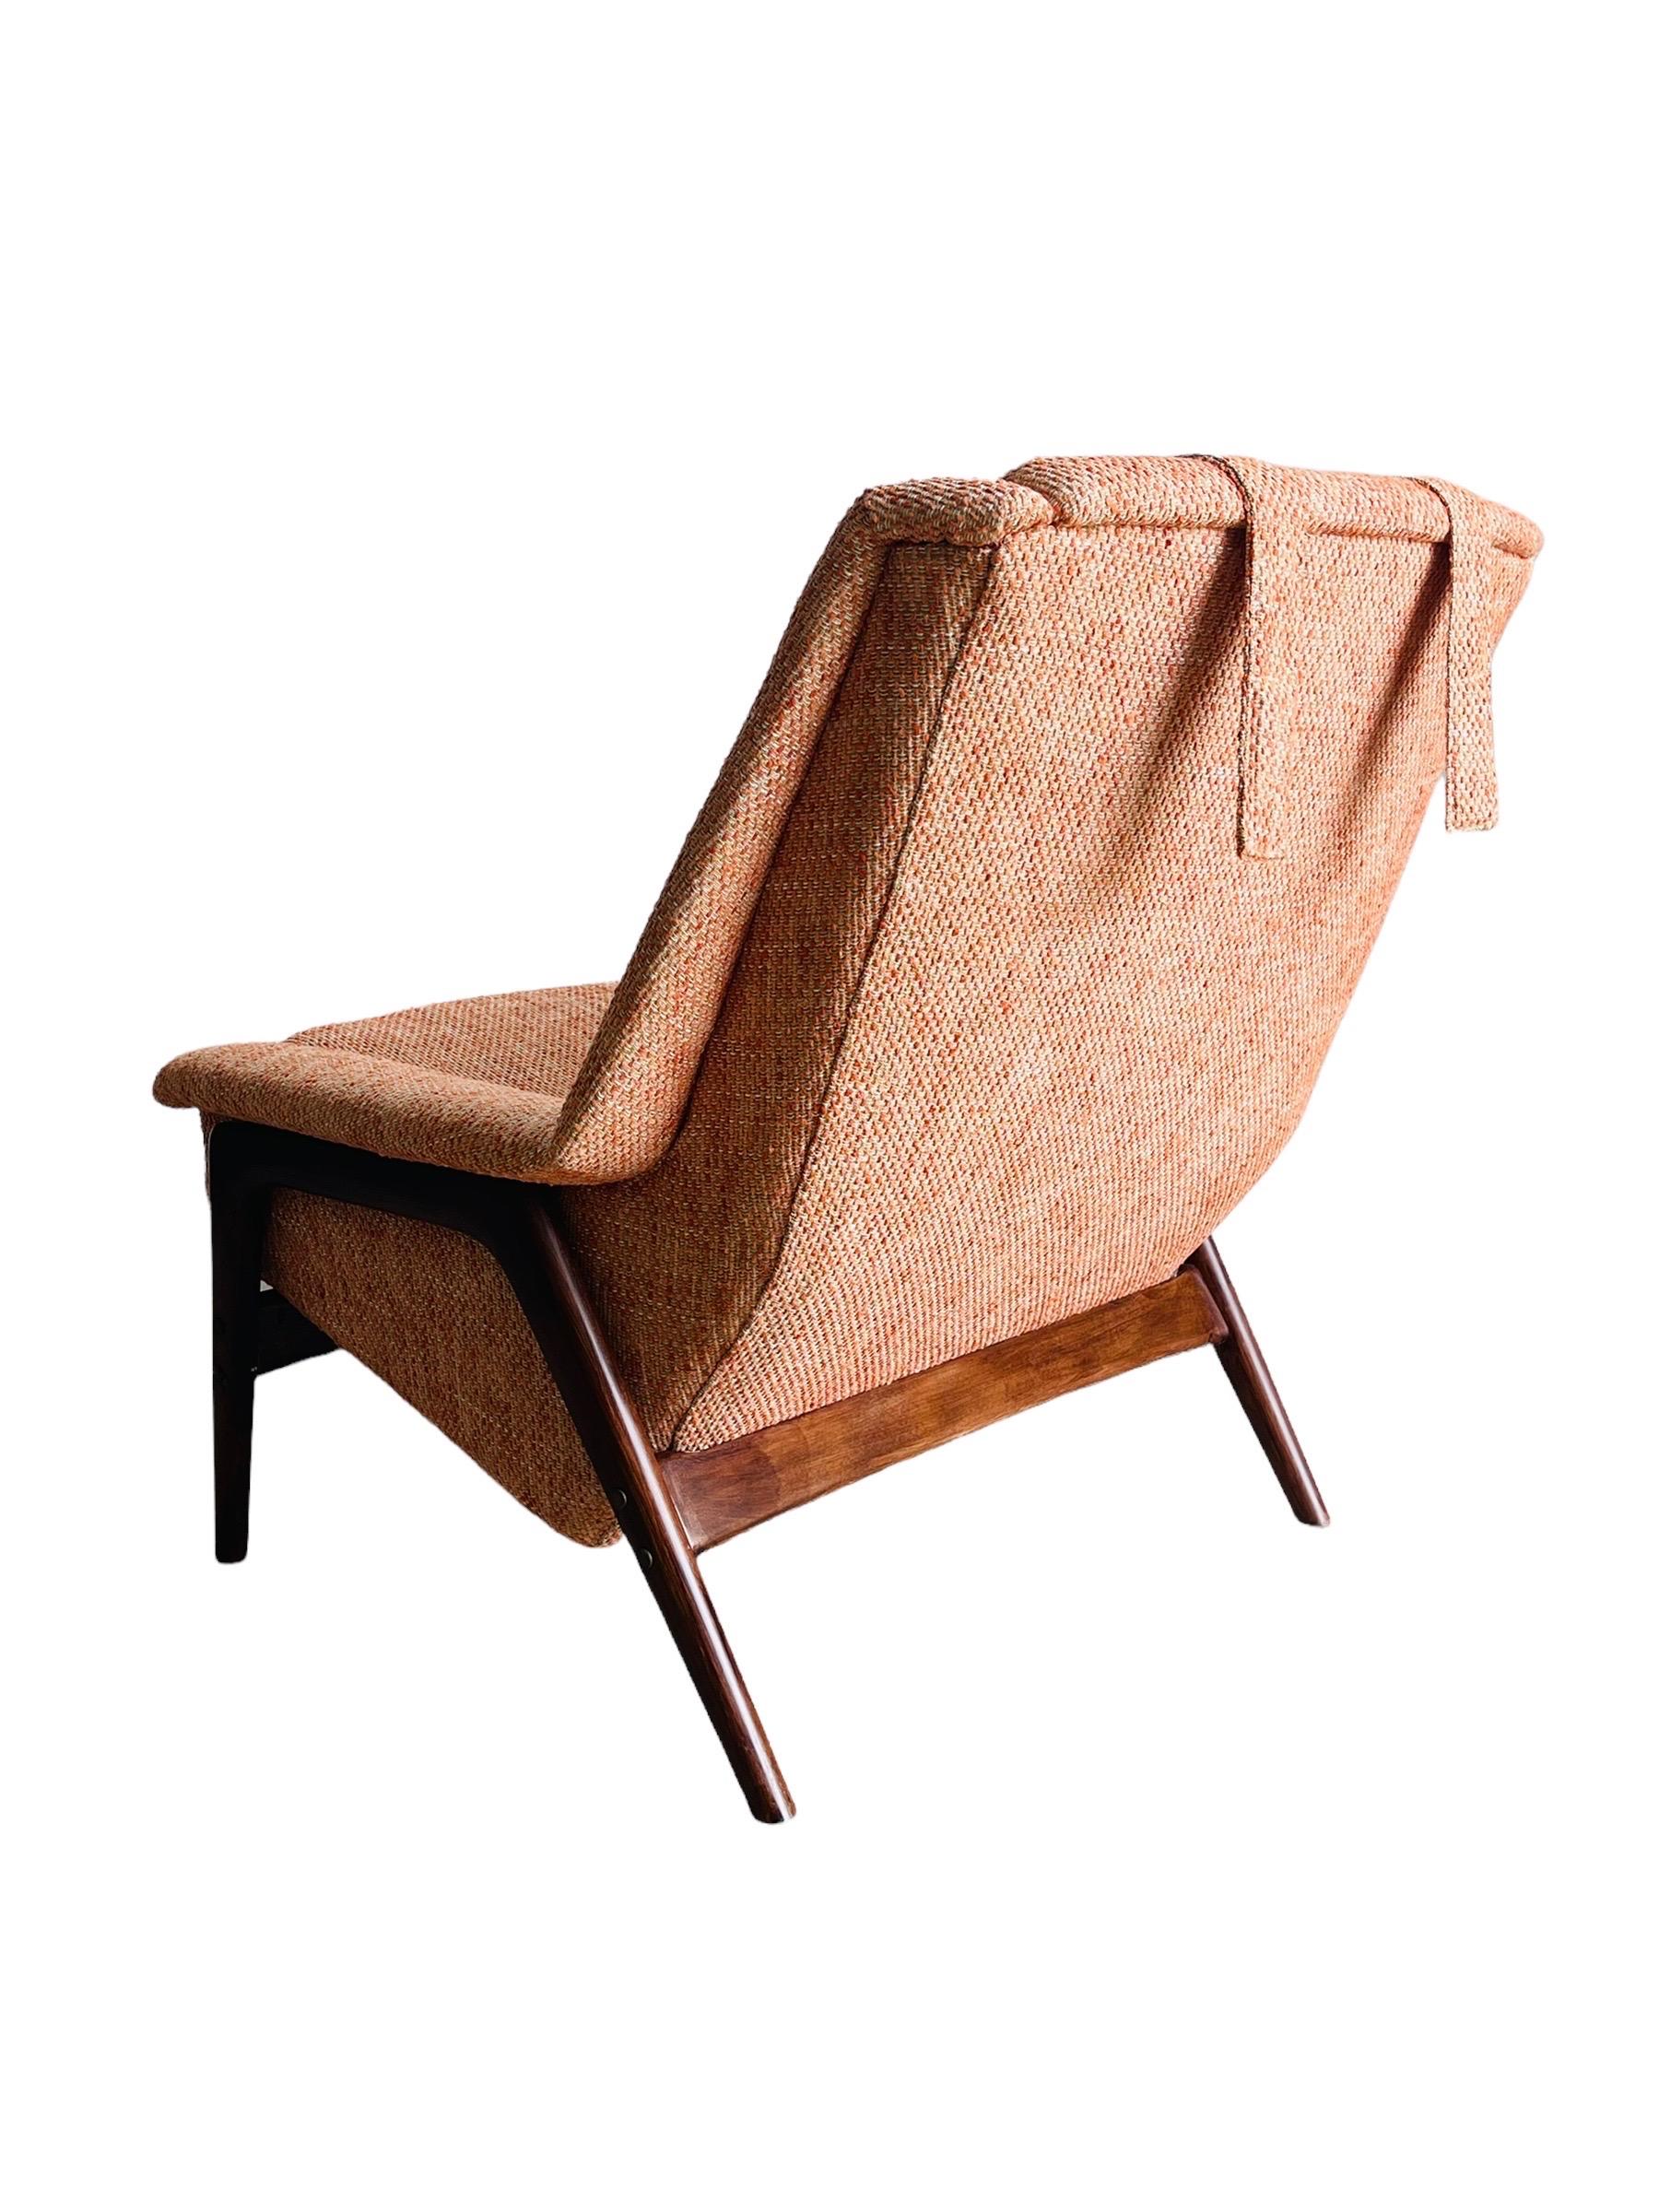 Folke Ohlsson Walnut Lounge Chair & Ottoman for DUX 2